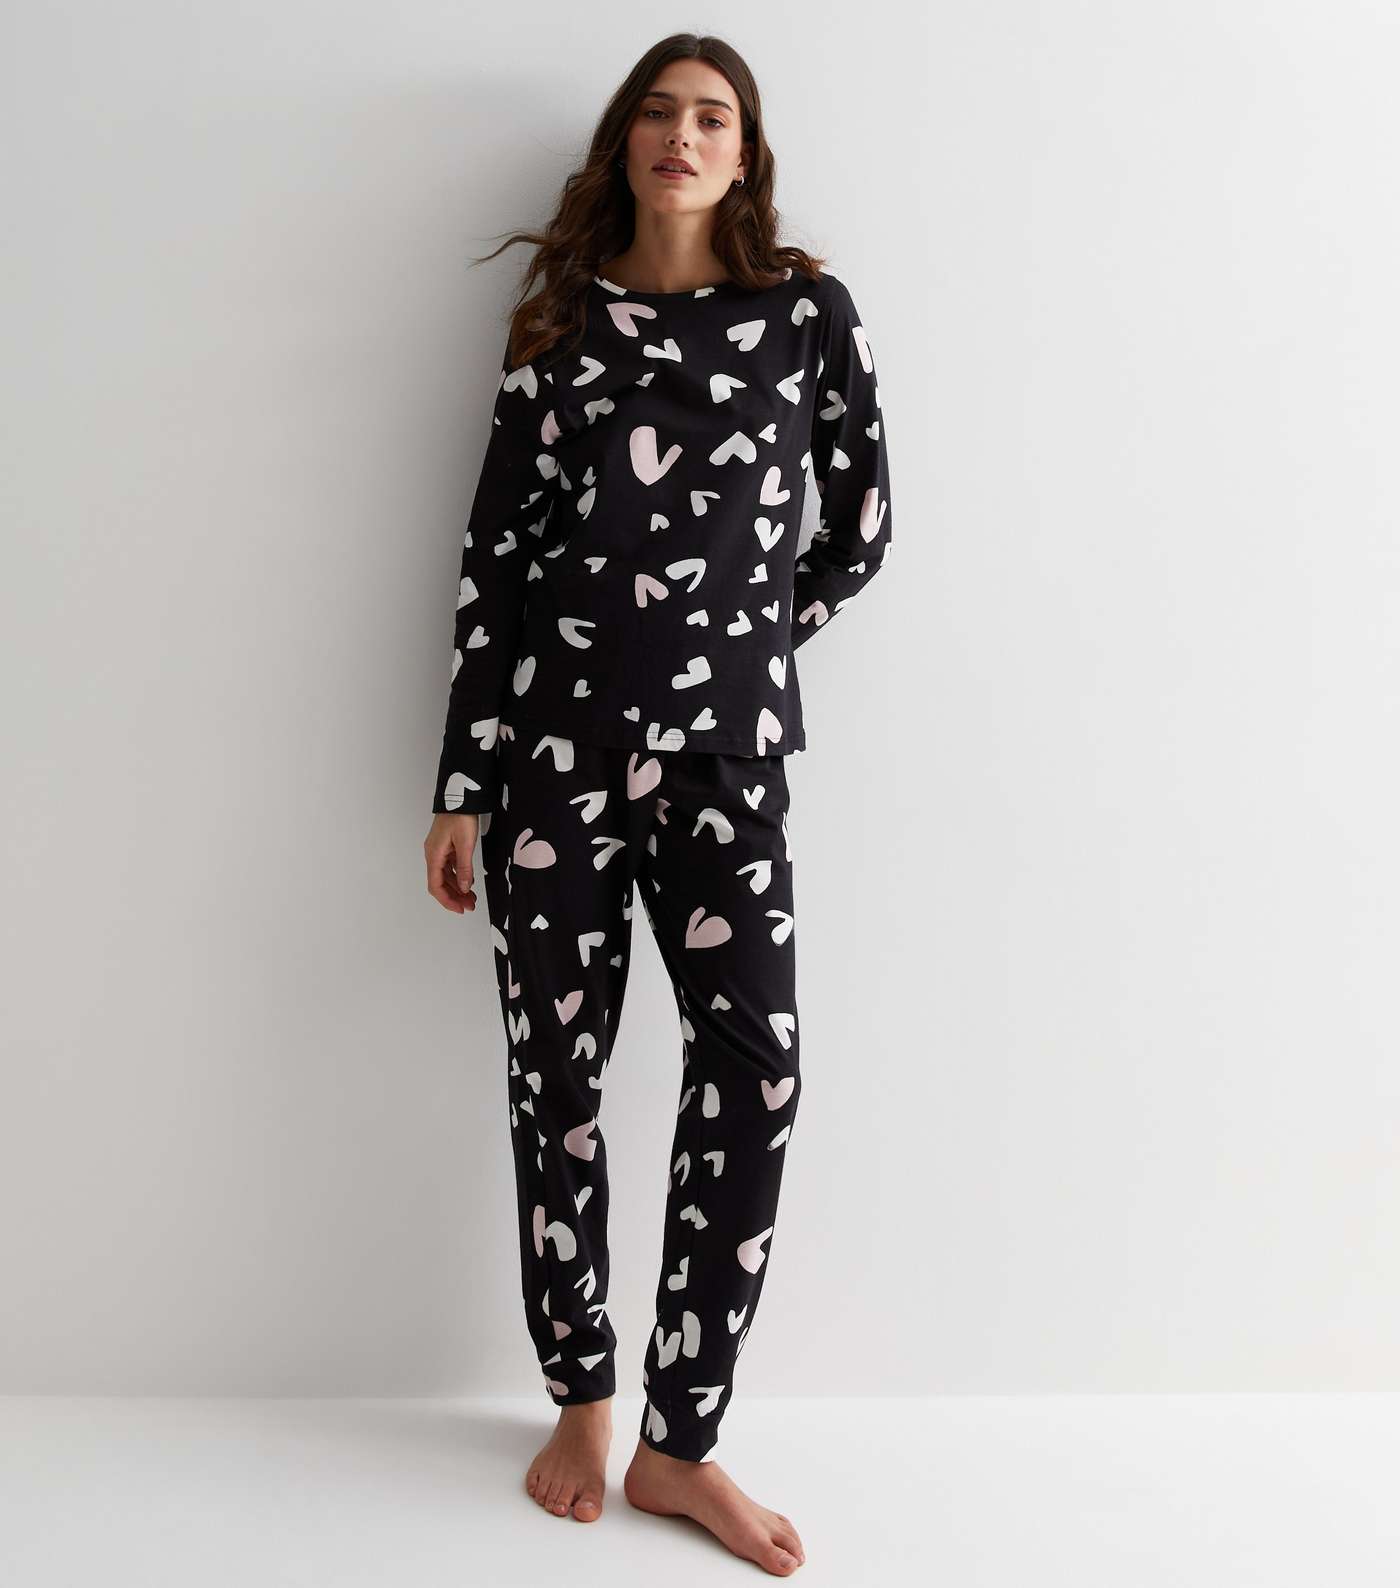 Black Jogger Pyjama Set with Heart Print Image 2